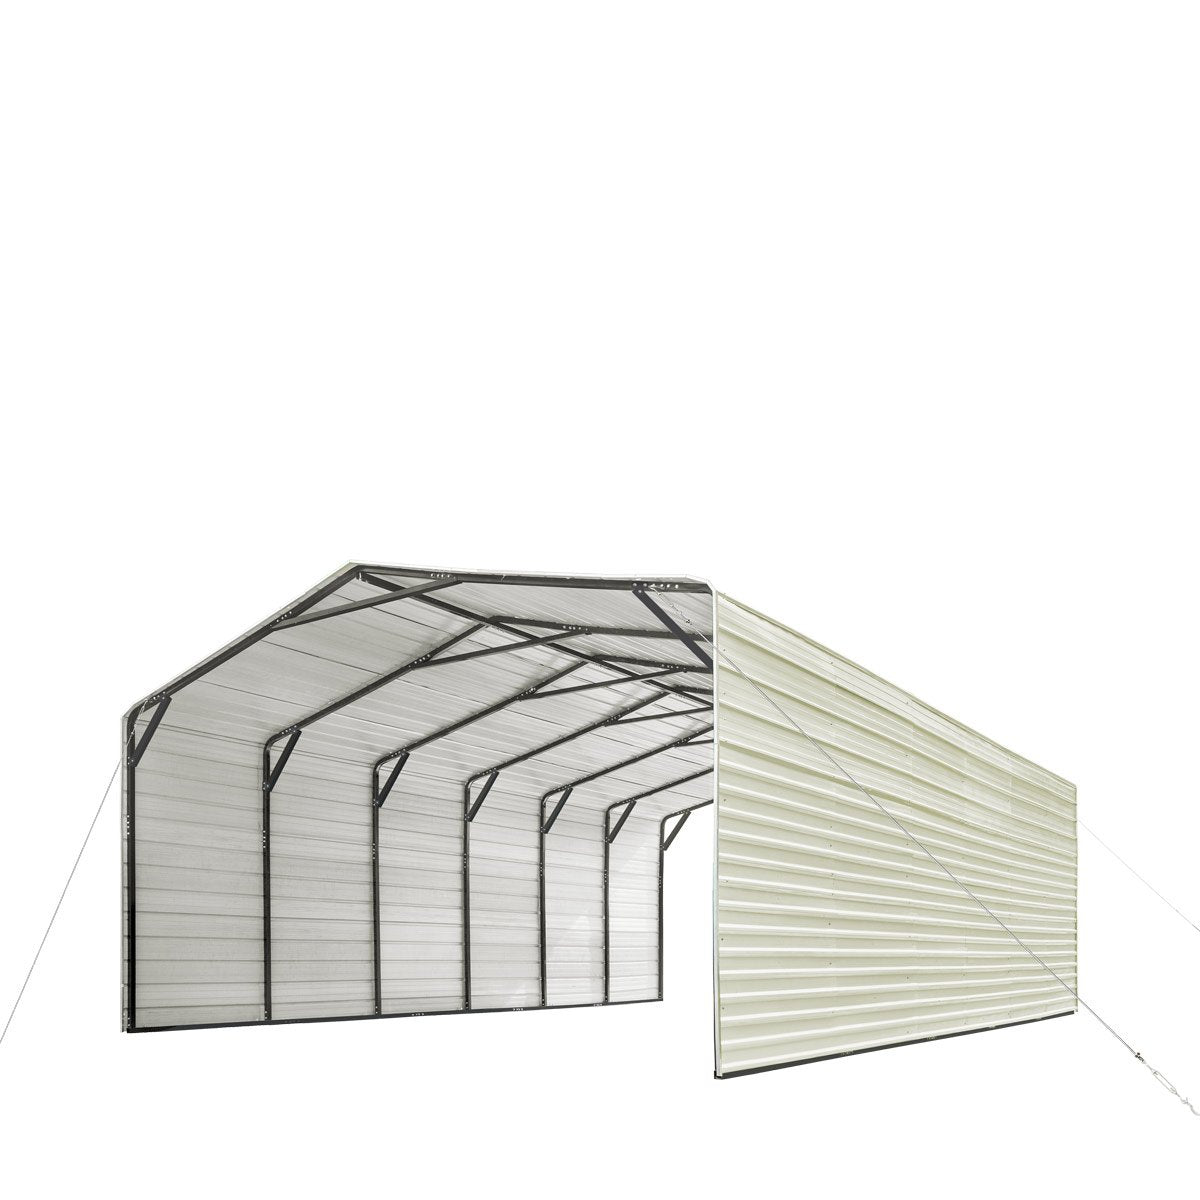 TMG Industrial 20’ x 30’ All-Steel Carport w/10’ Enclosed Sidewalls,  Galvanized Roof, Powder Coated, Enclosed Sidewalls, Polyester Paint  Coating, 